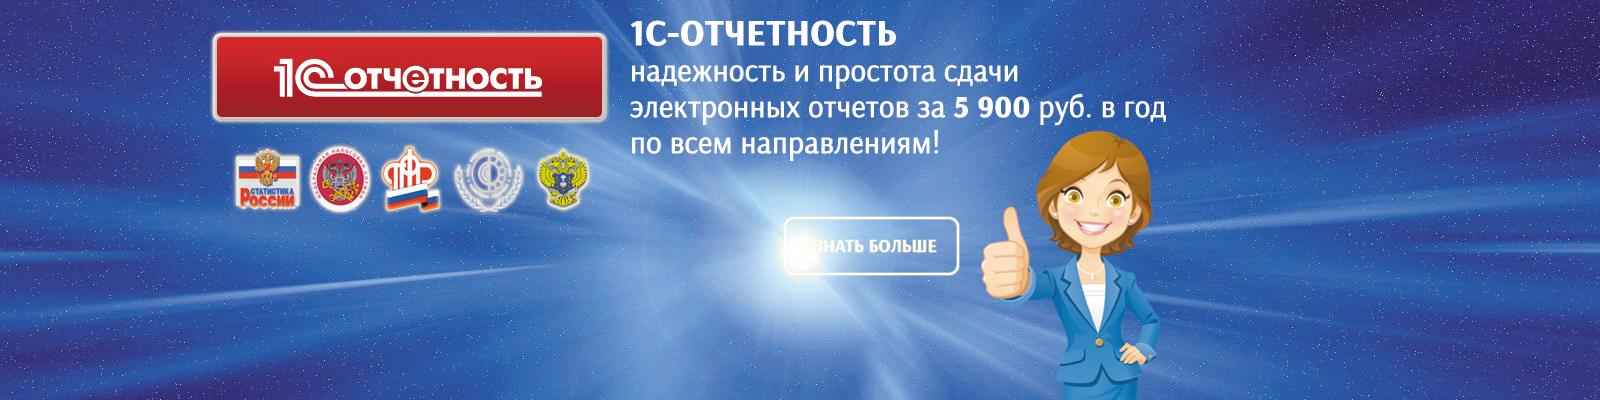 http://www.sovet-1c.ru/service/1c-otchetnost/